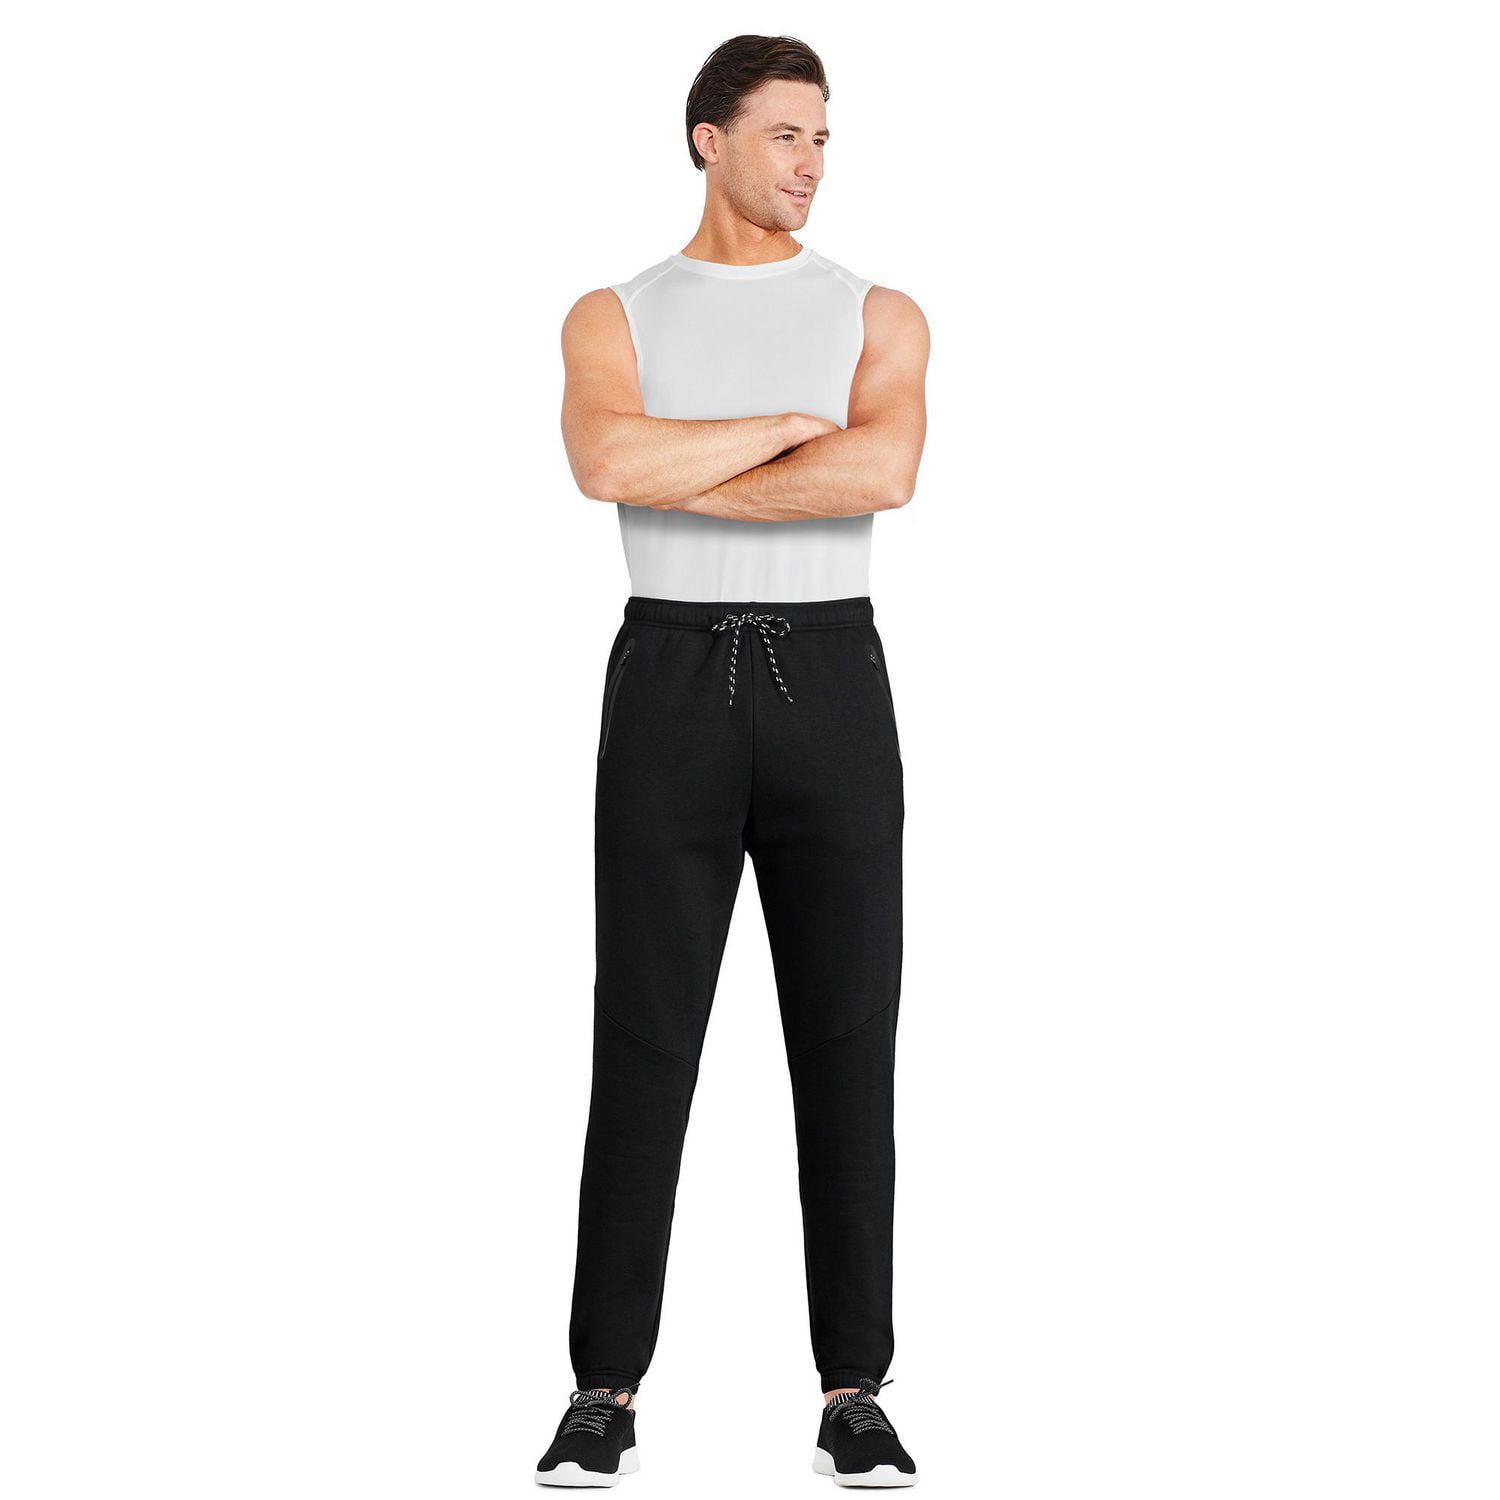 Athletic Works Men's Open Bottom Fleece Pants, Sizes S-2XL